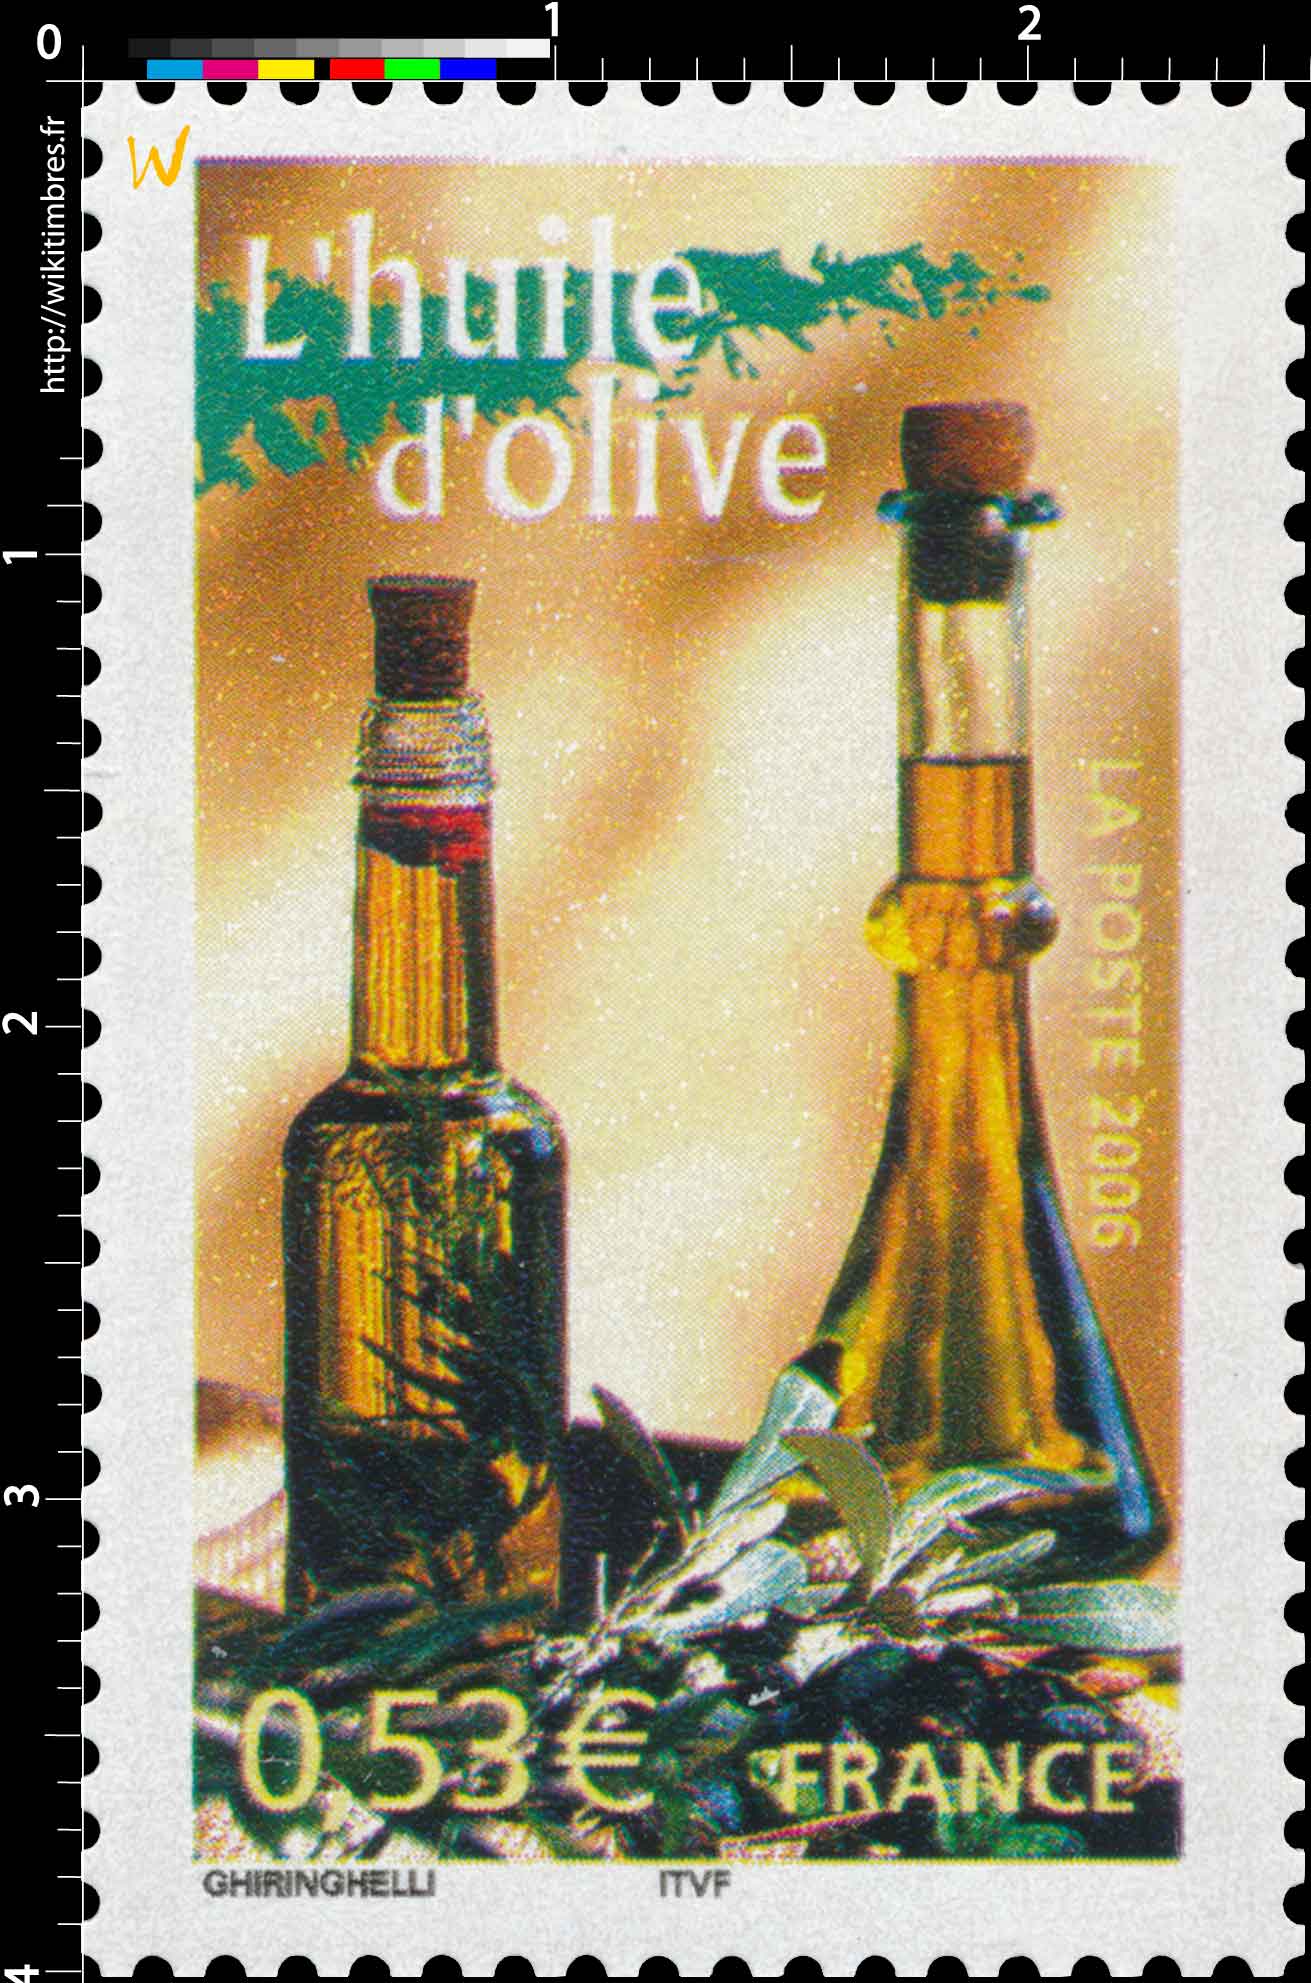 2006 L'huile d'olive